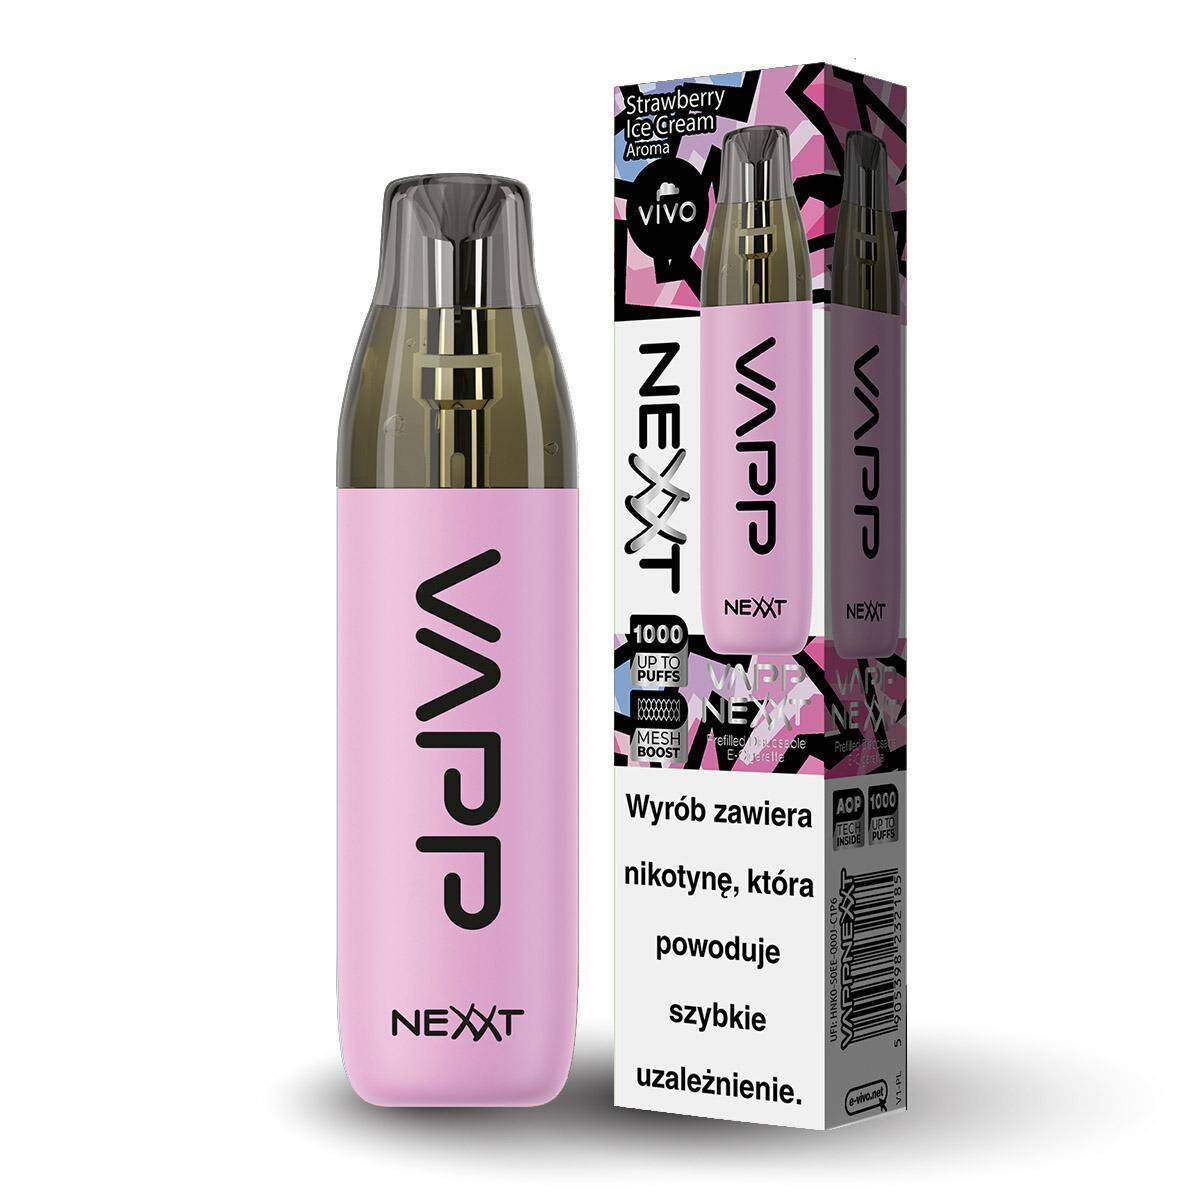 E-papieros VIVO Nexxt - Strawberry Ice Cream 20mg